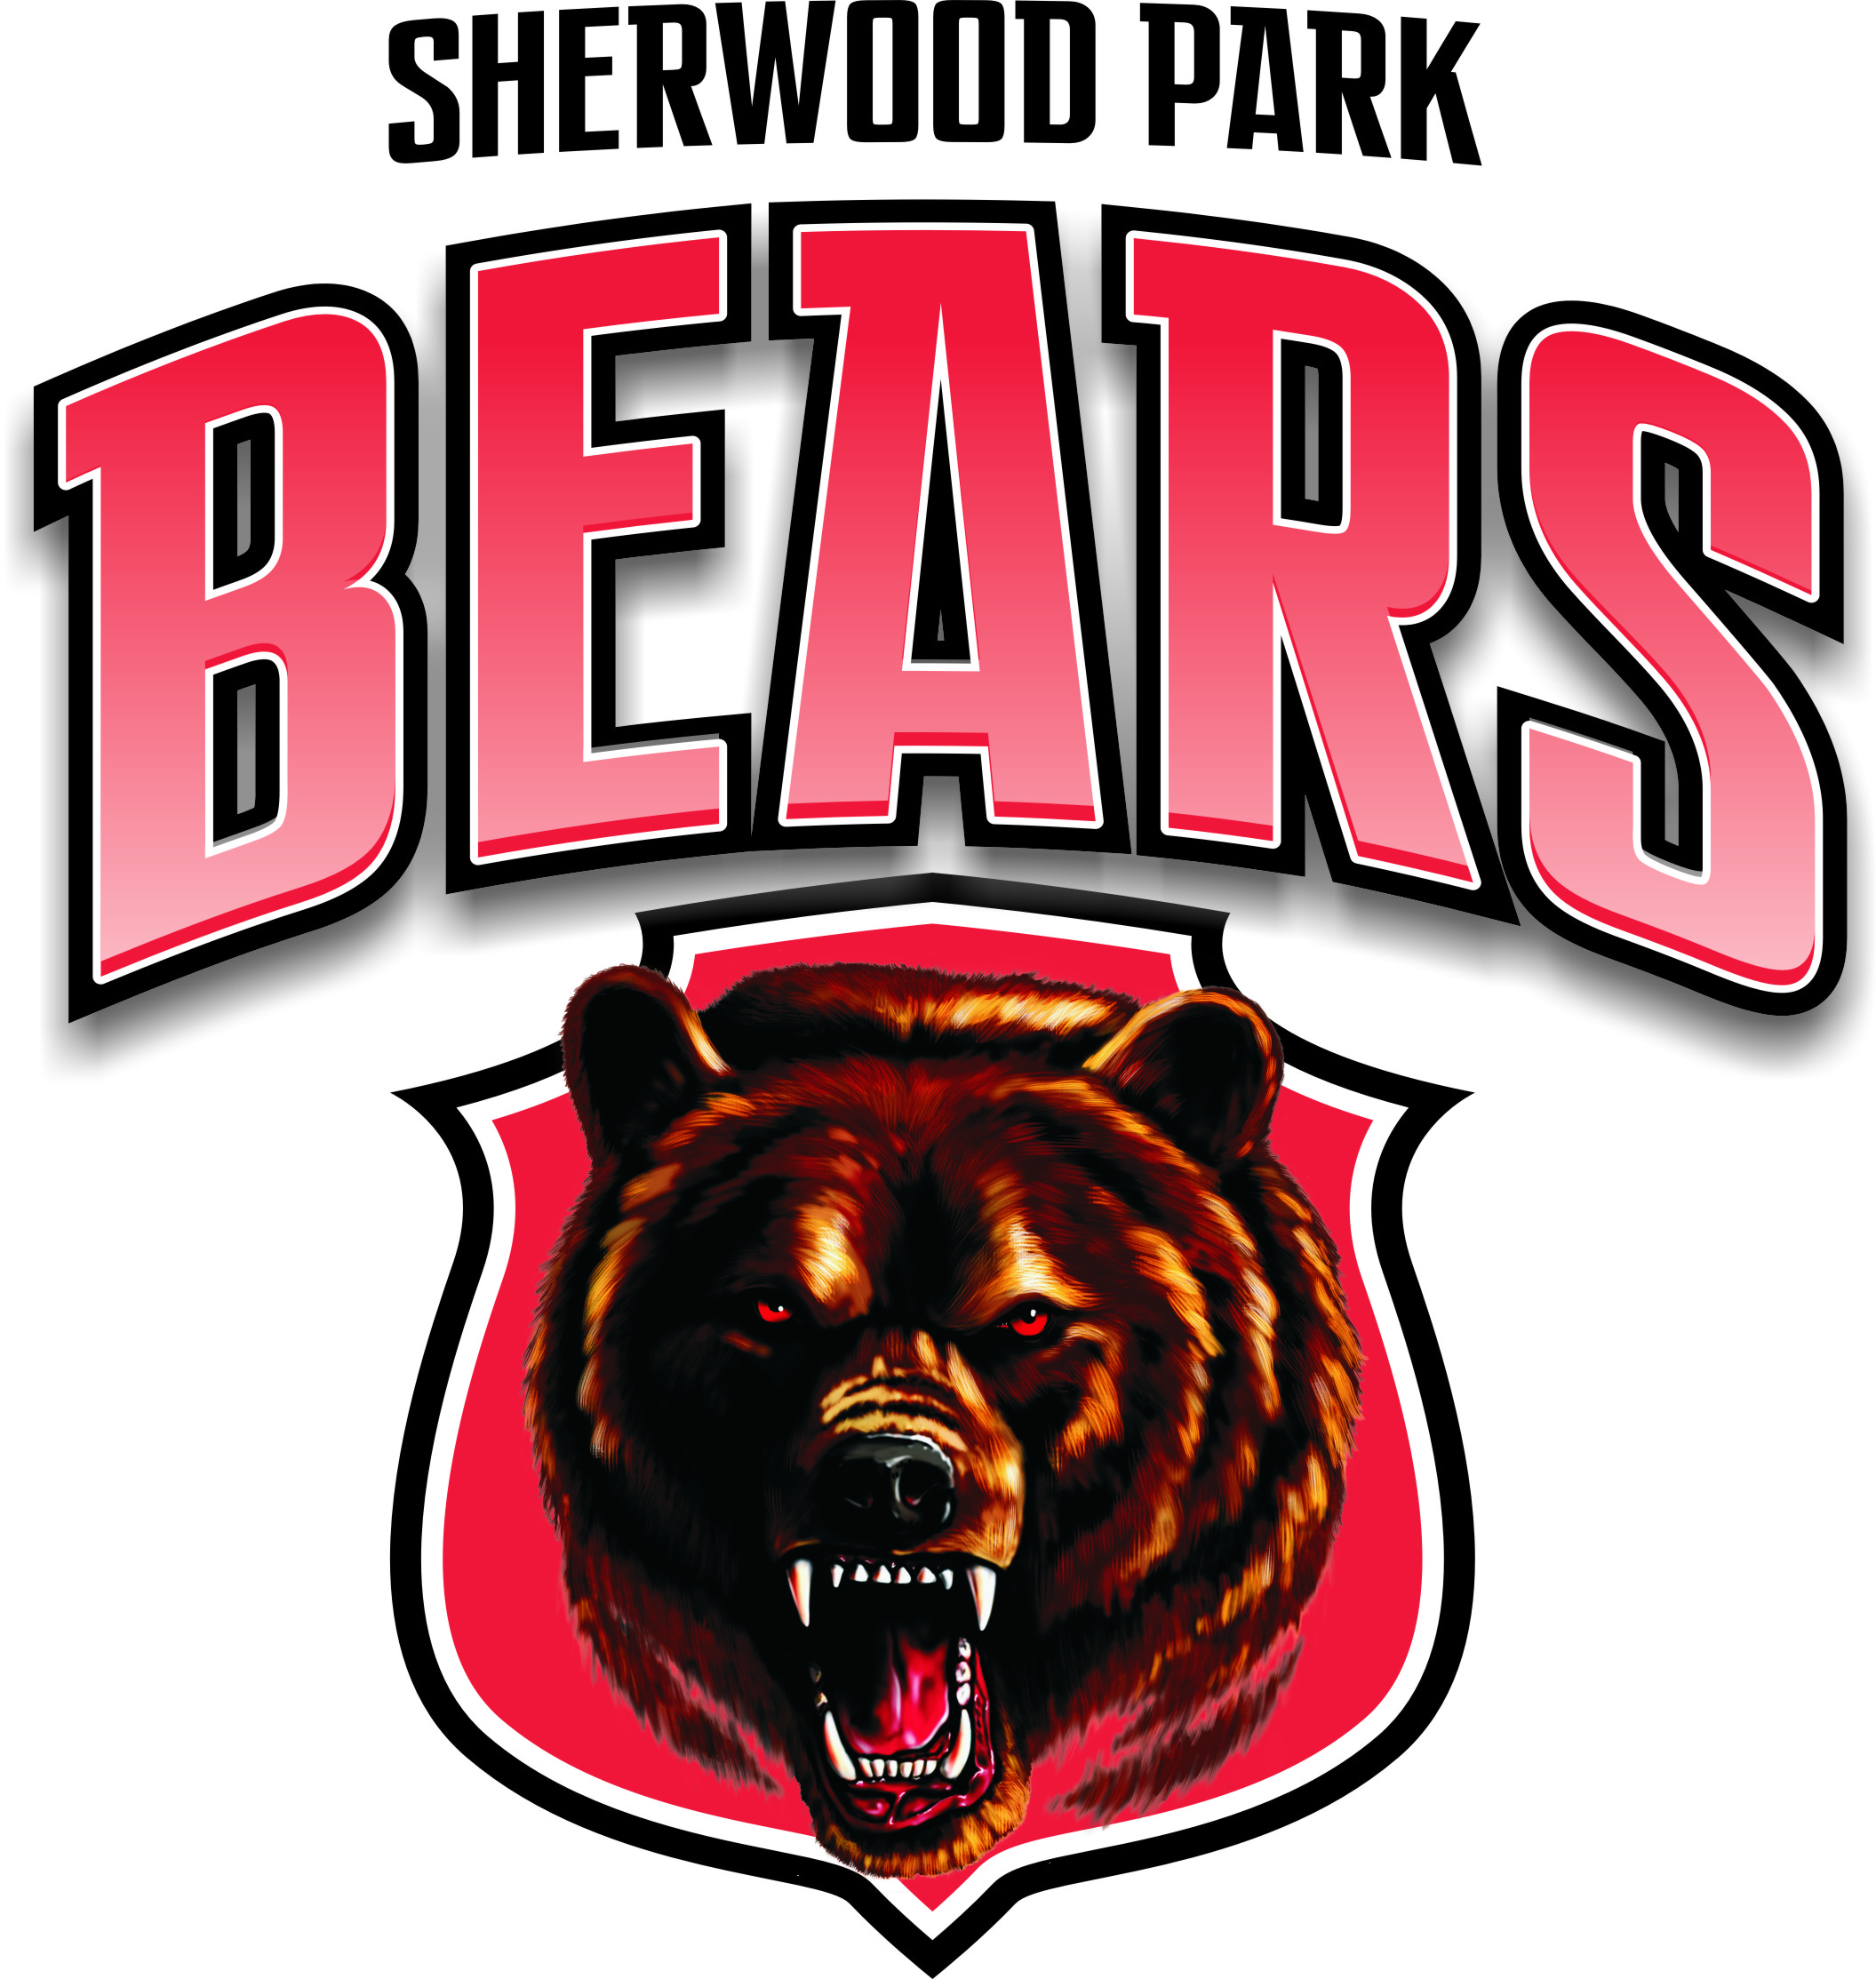 SHERWOOD PARK BEARS.jpg